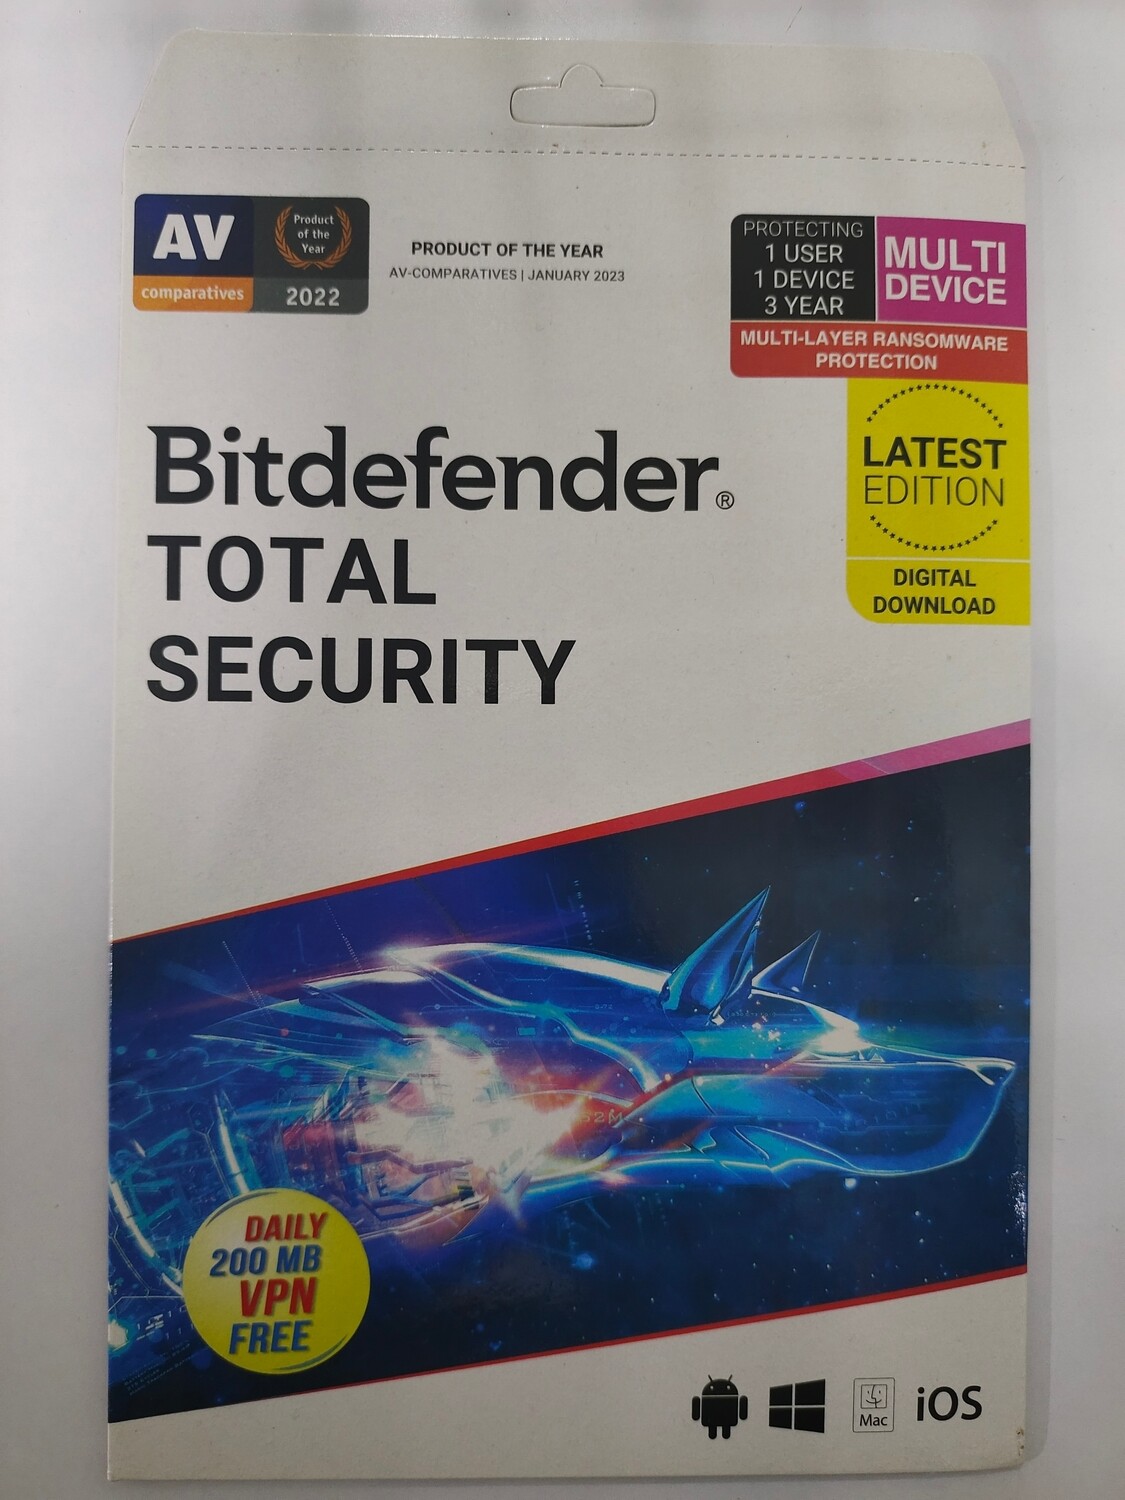 New, 1 User, 3 Year, BitDefender Total Security